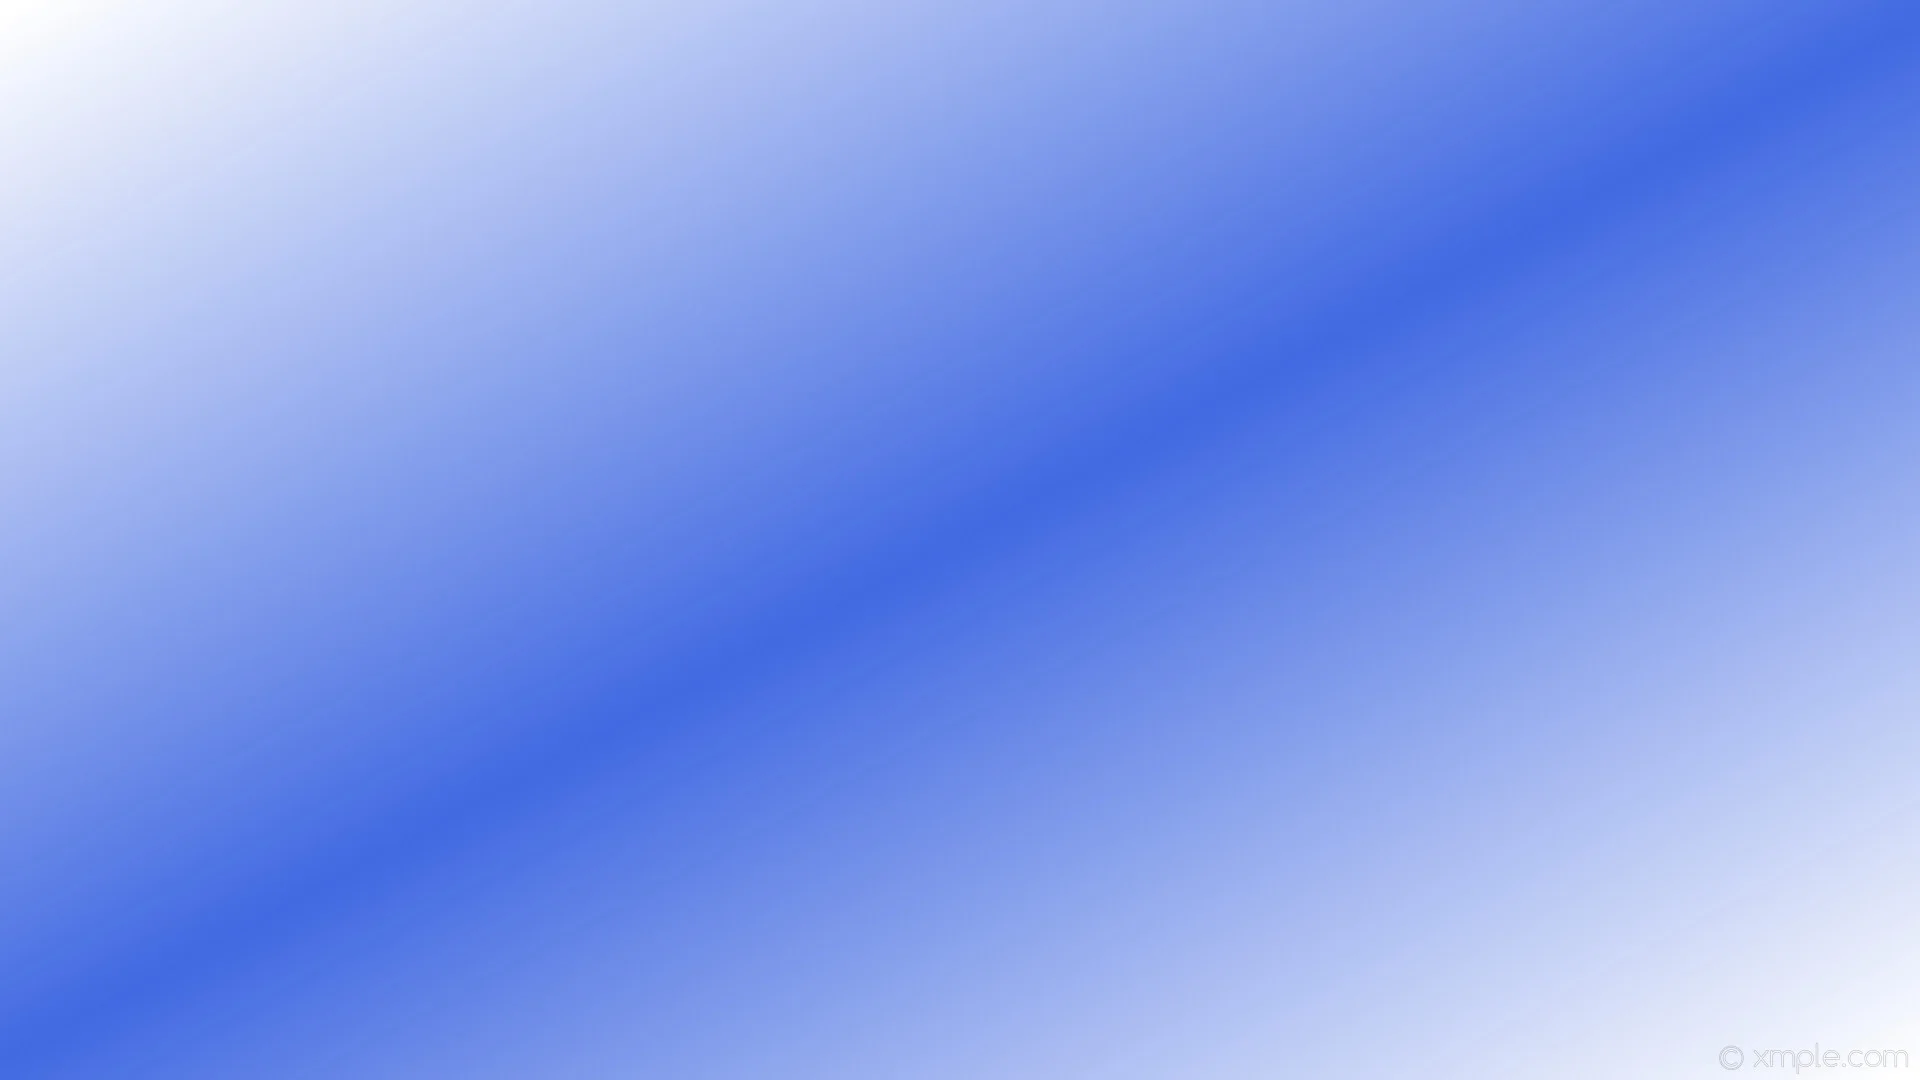 wallpaper blue gradient white highlight linear royal blue #ffffff #4169e1  330Â° 50%